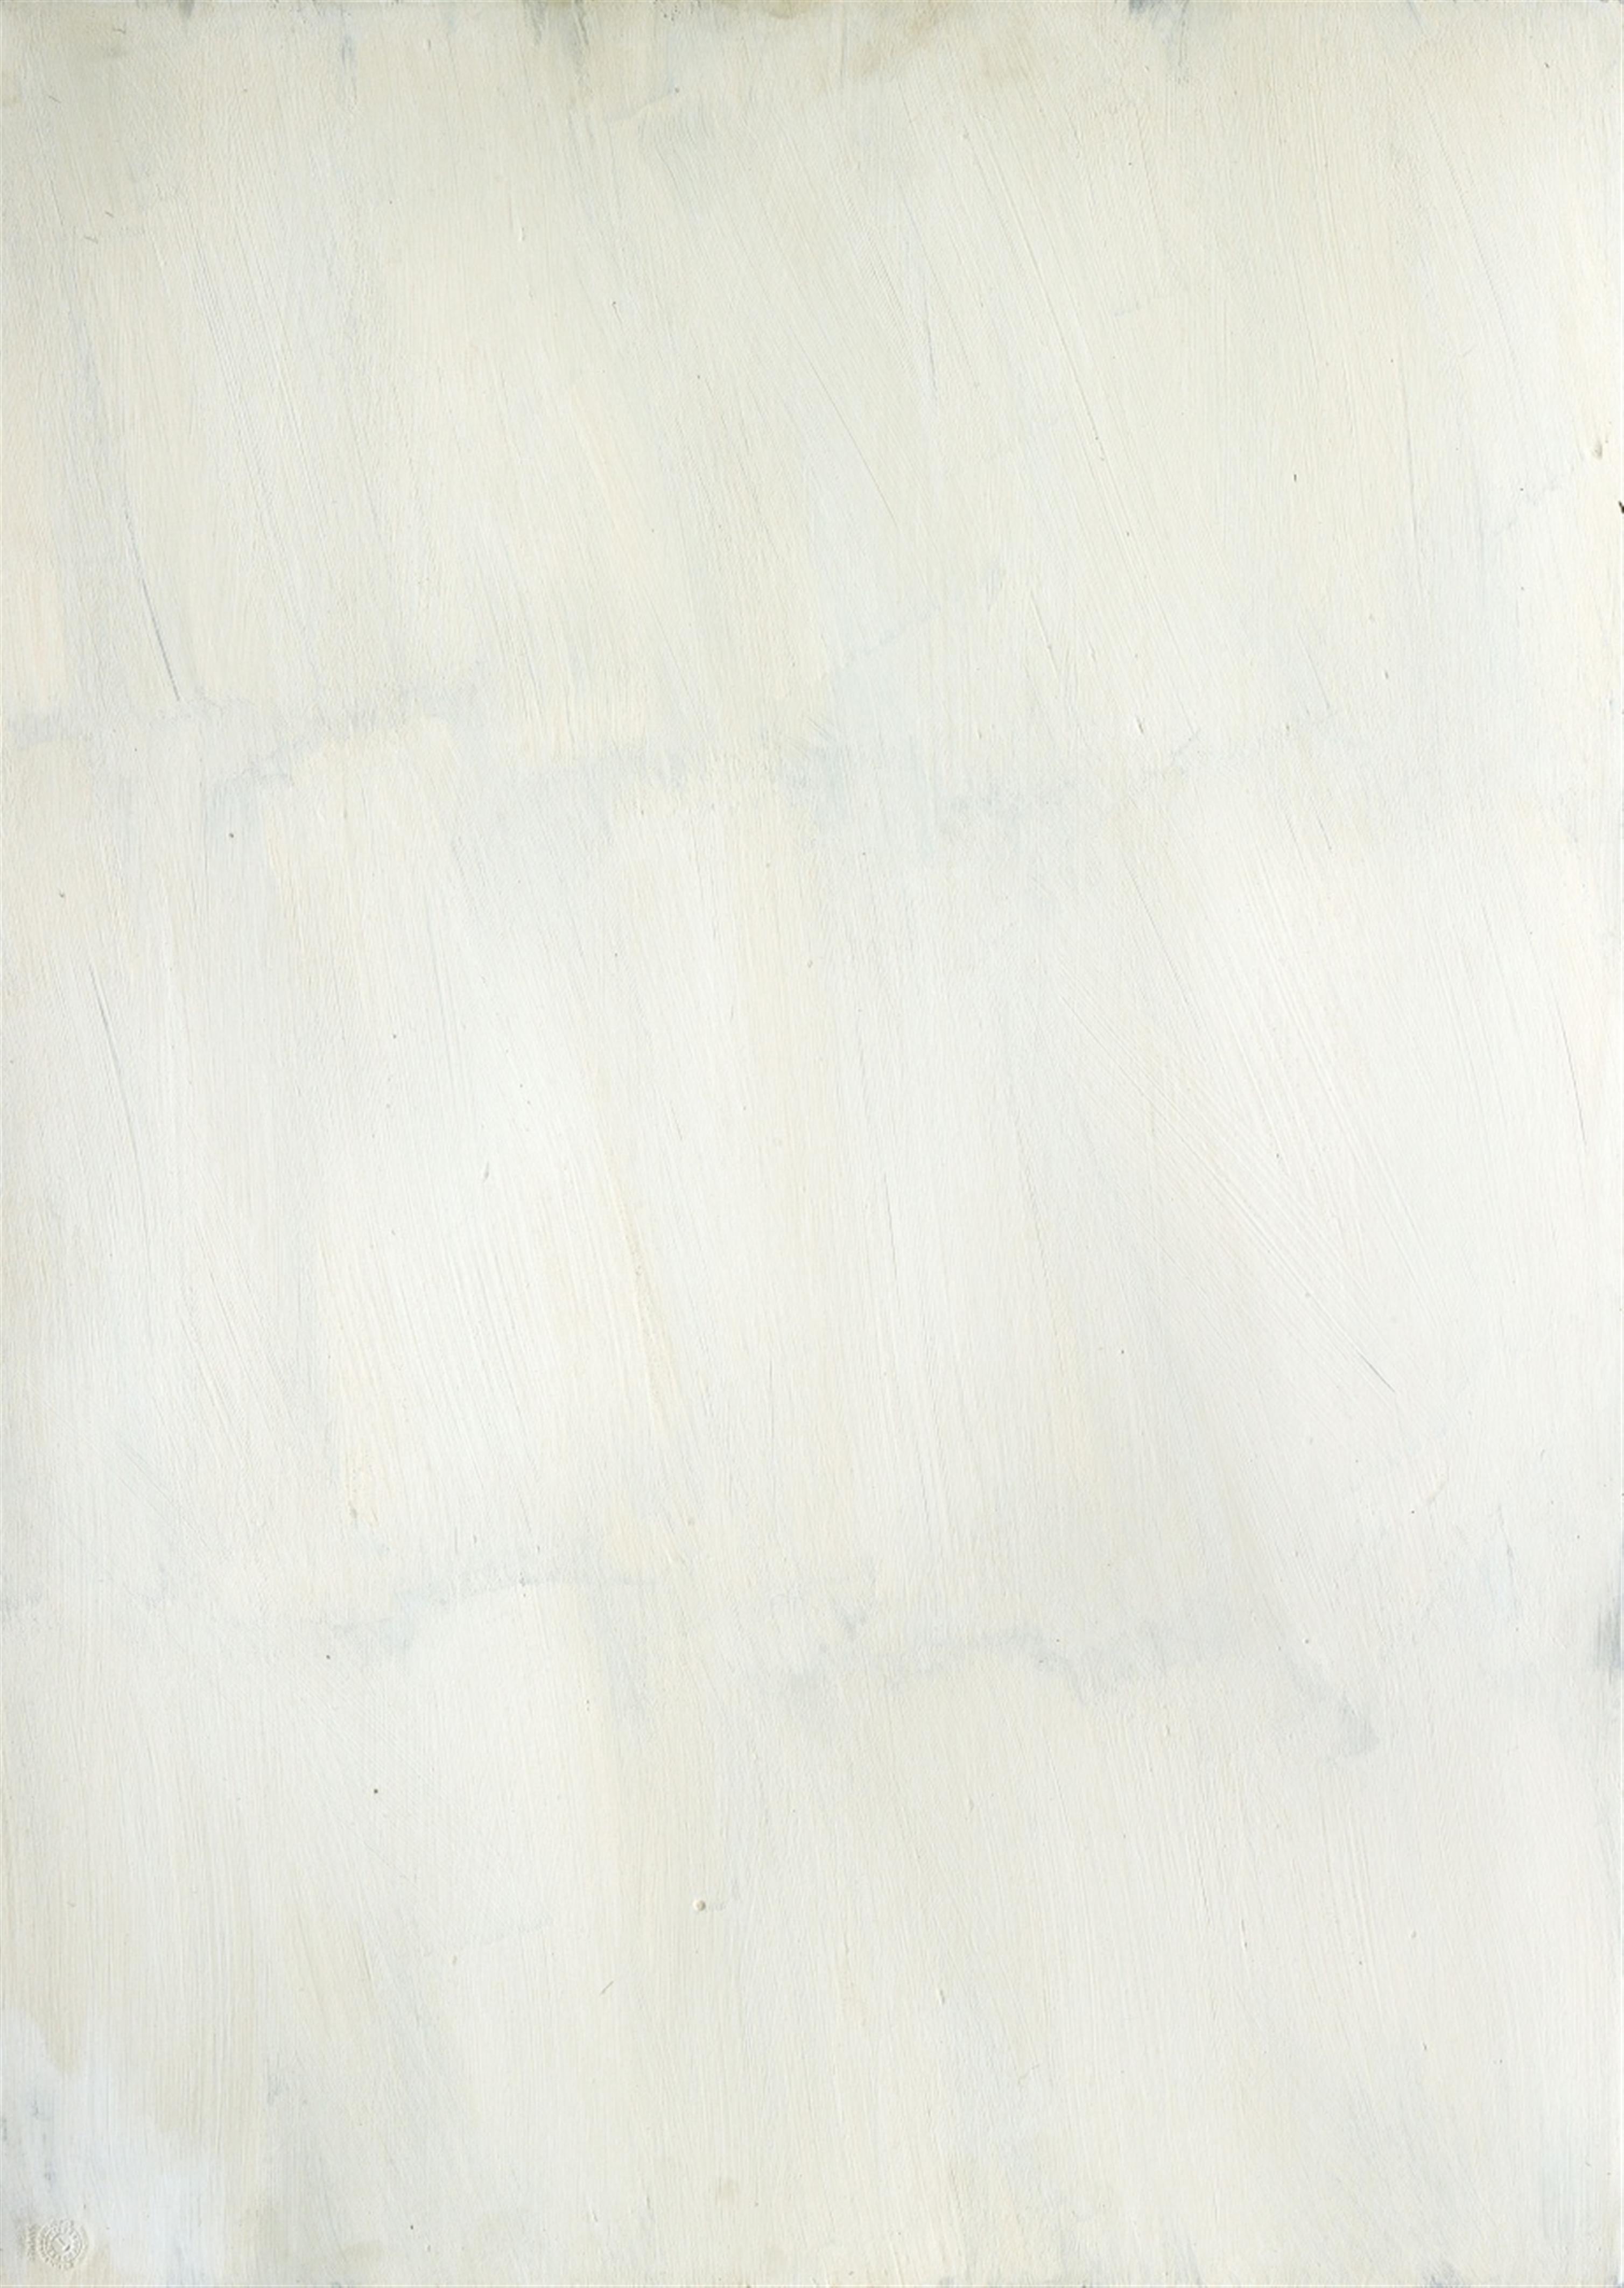 Raimund Girke - Untitled (weiß) - image-1